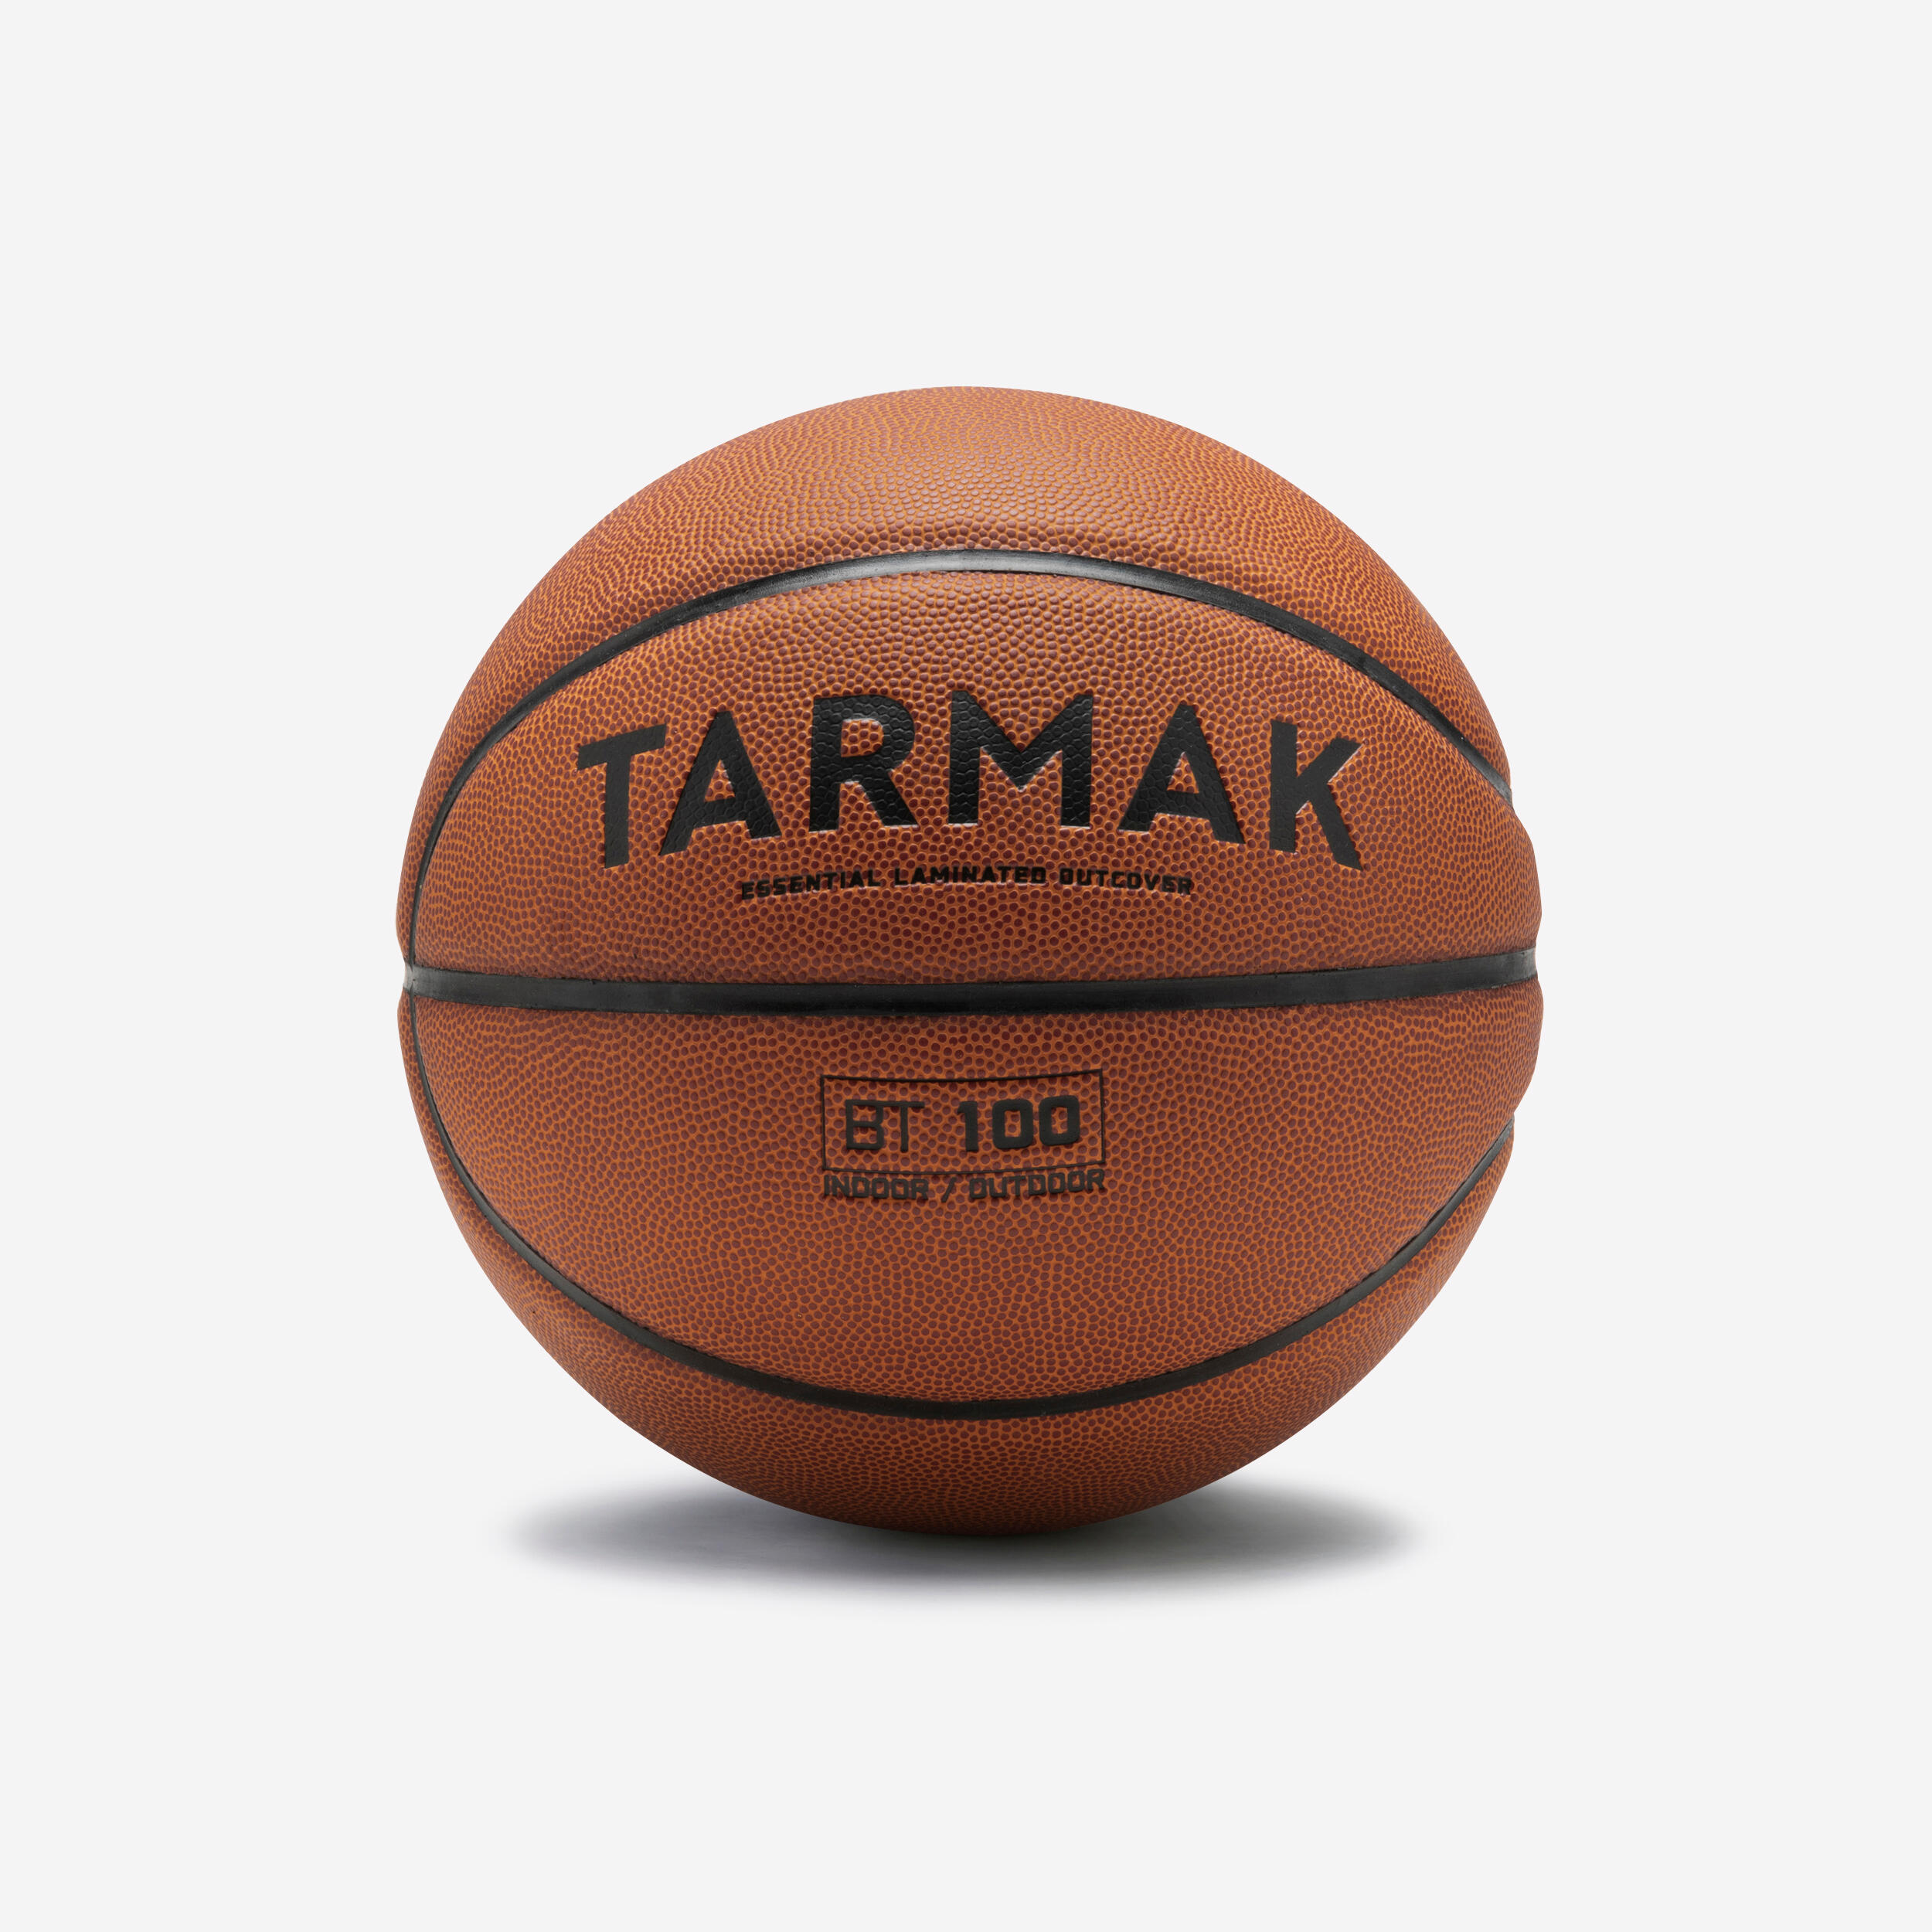 Basketboll Stl 6 - Bt100 Touch - Brun